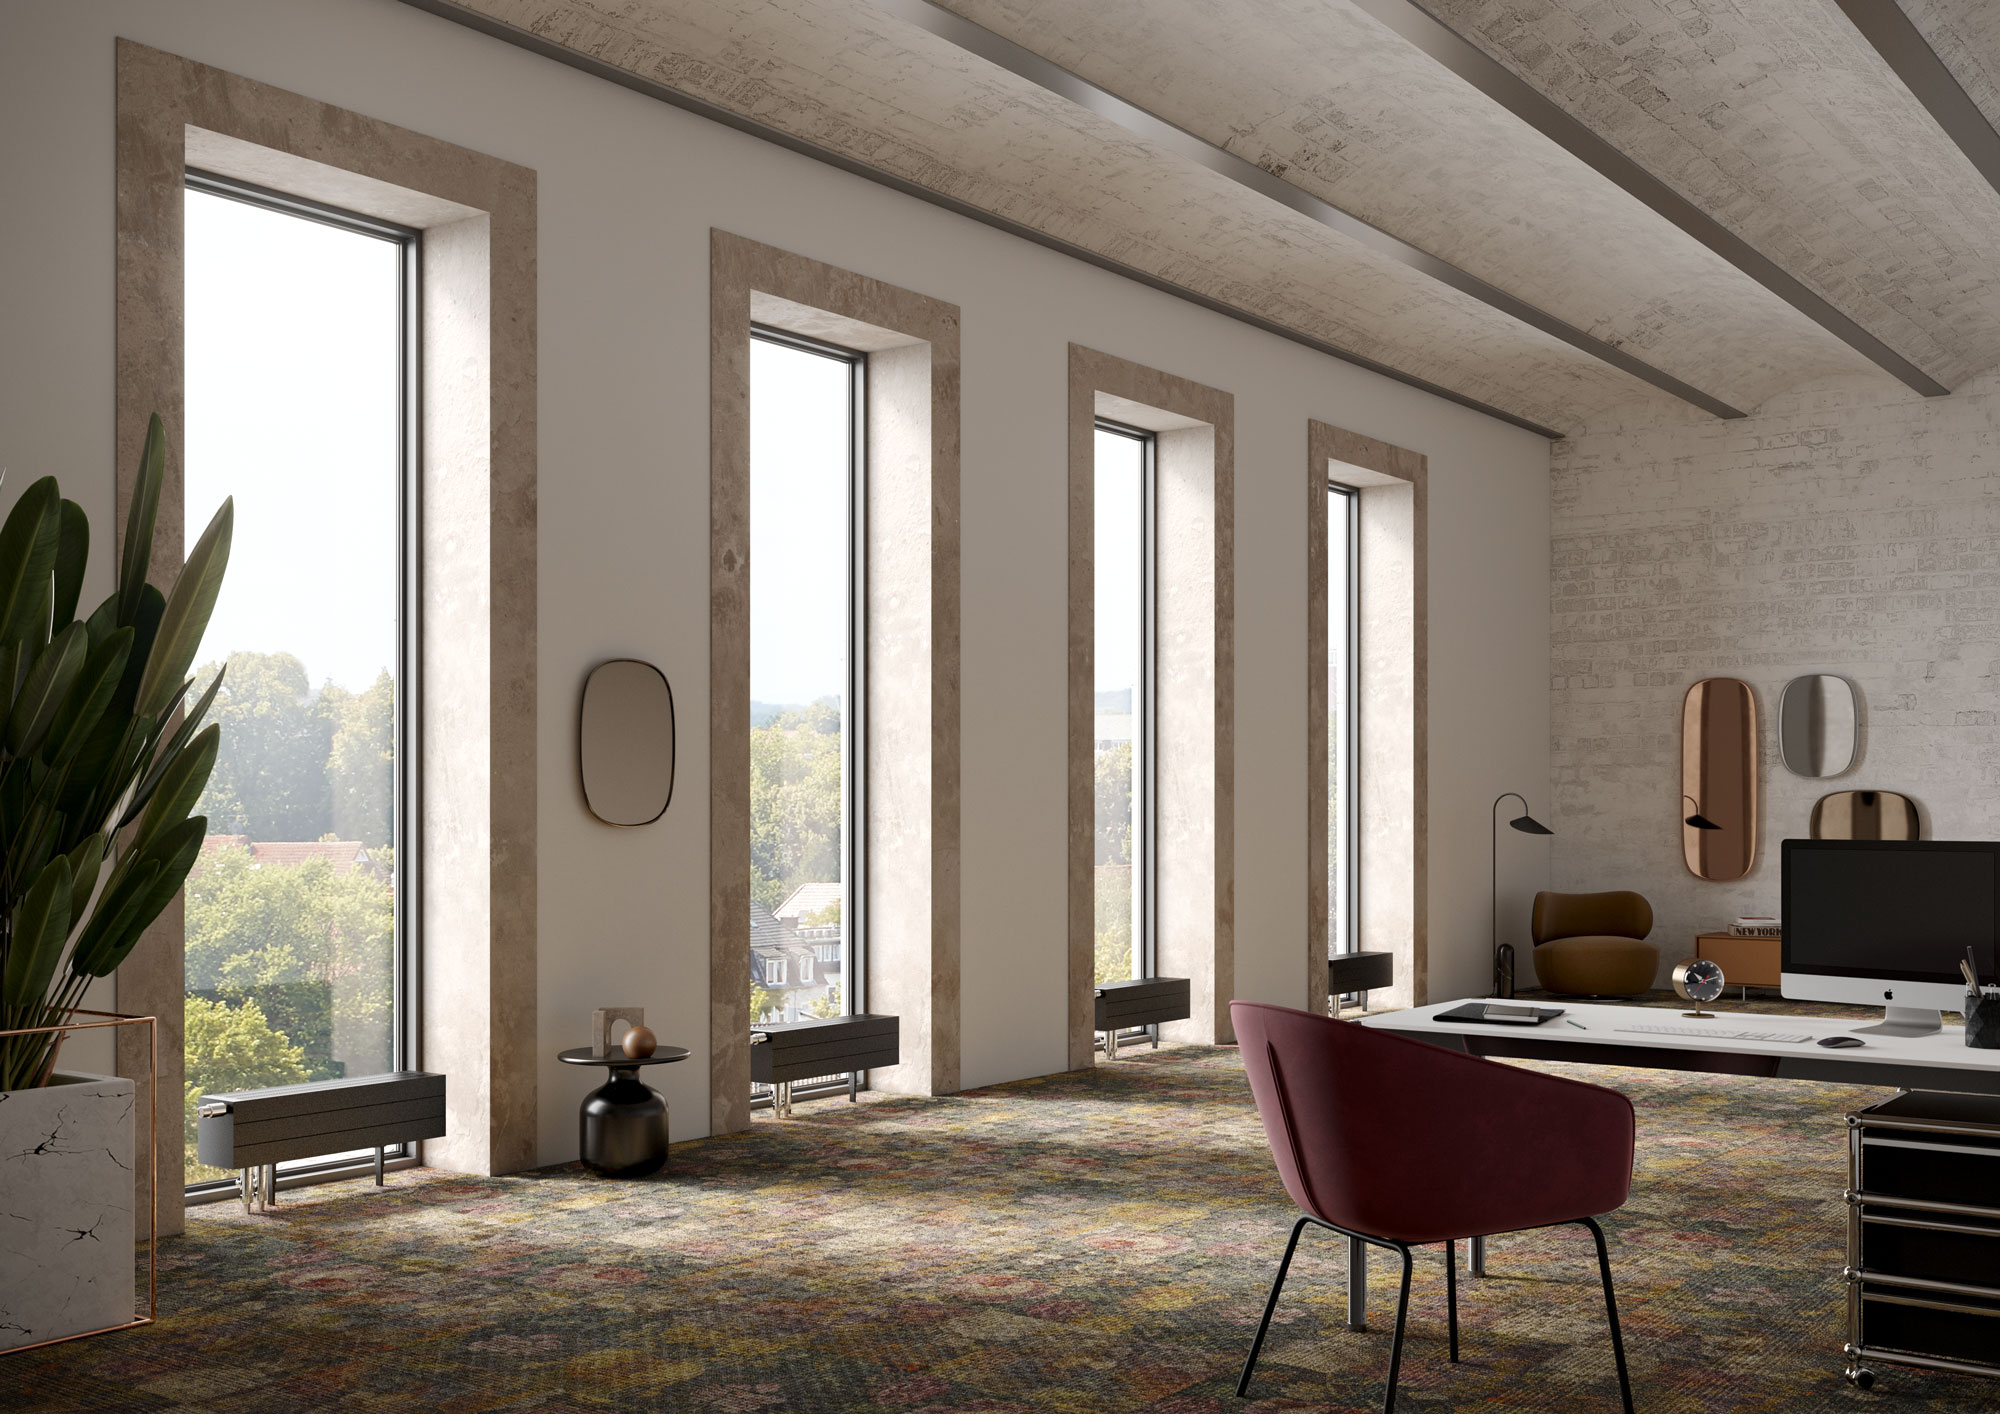 Kermi convectors – compact, elegant thermal comfort. Ideal in front of floor-to-ceiling window areas.